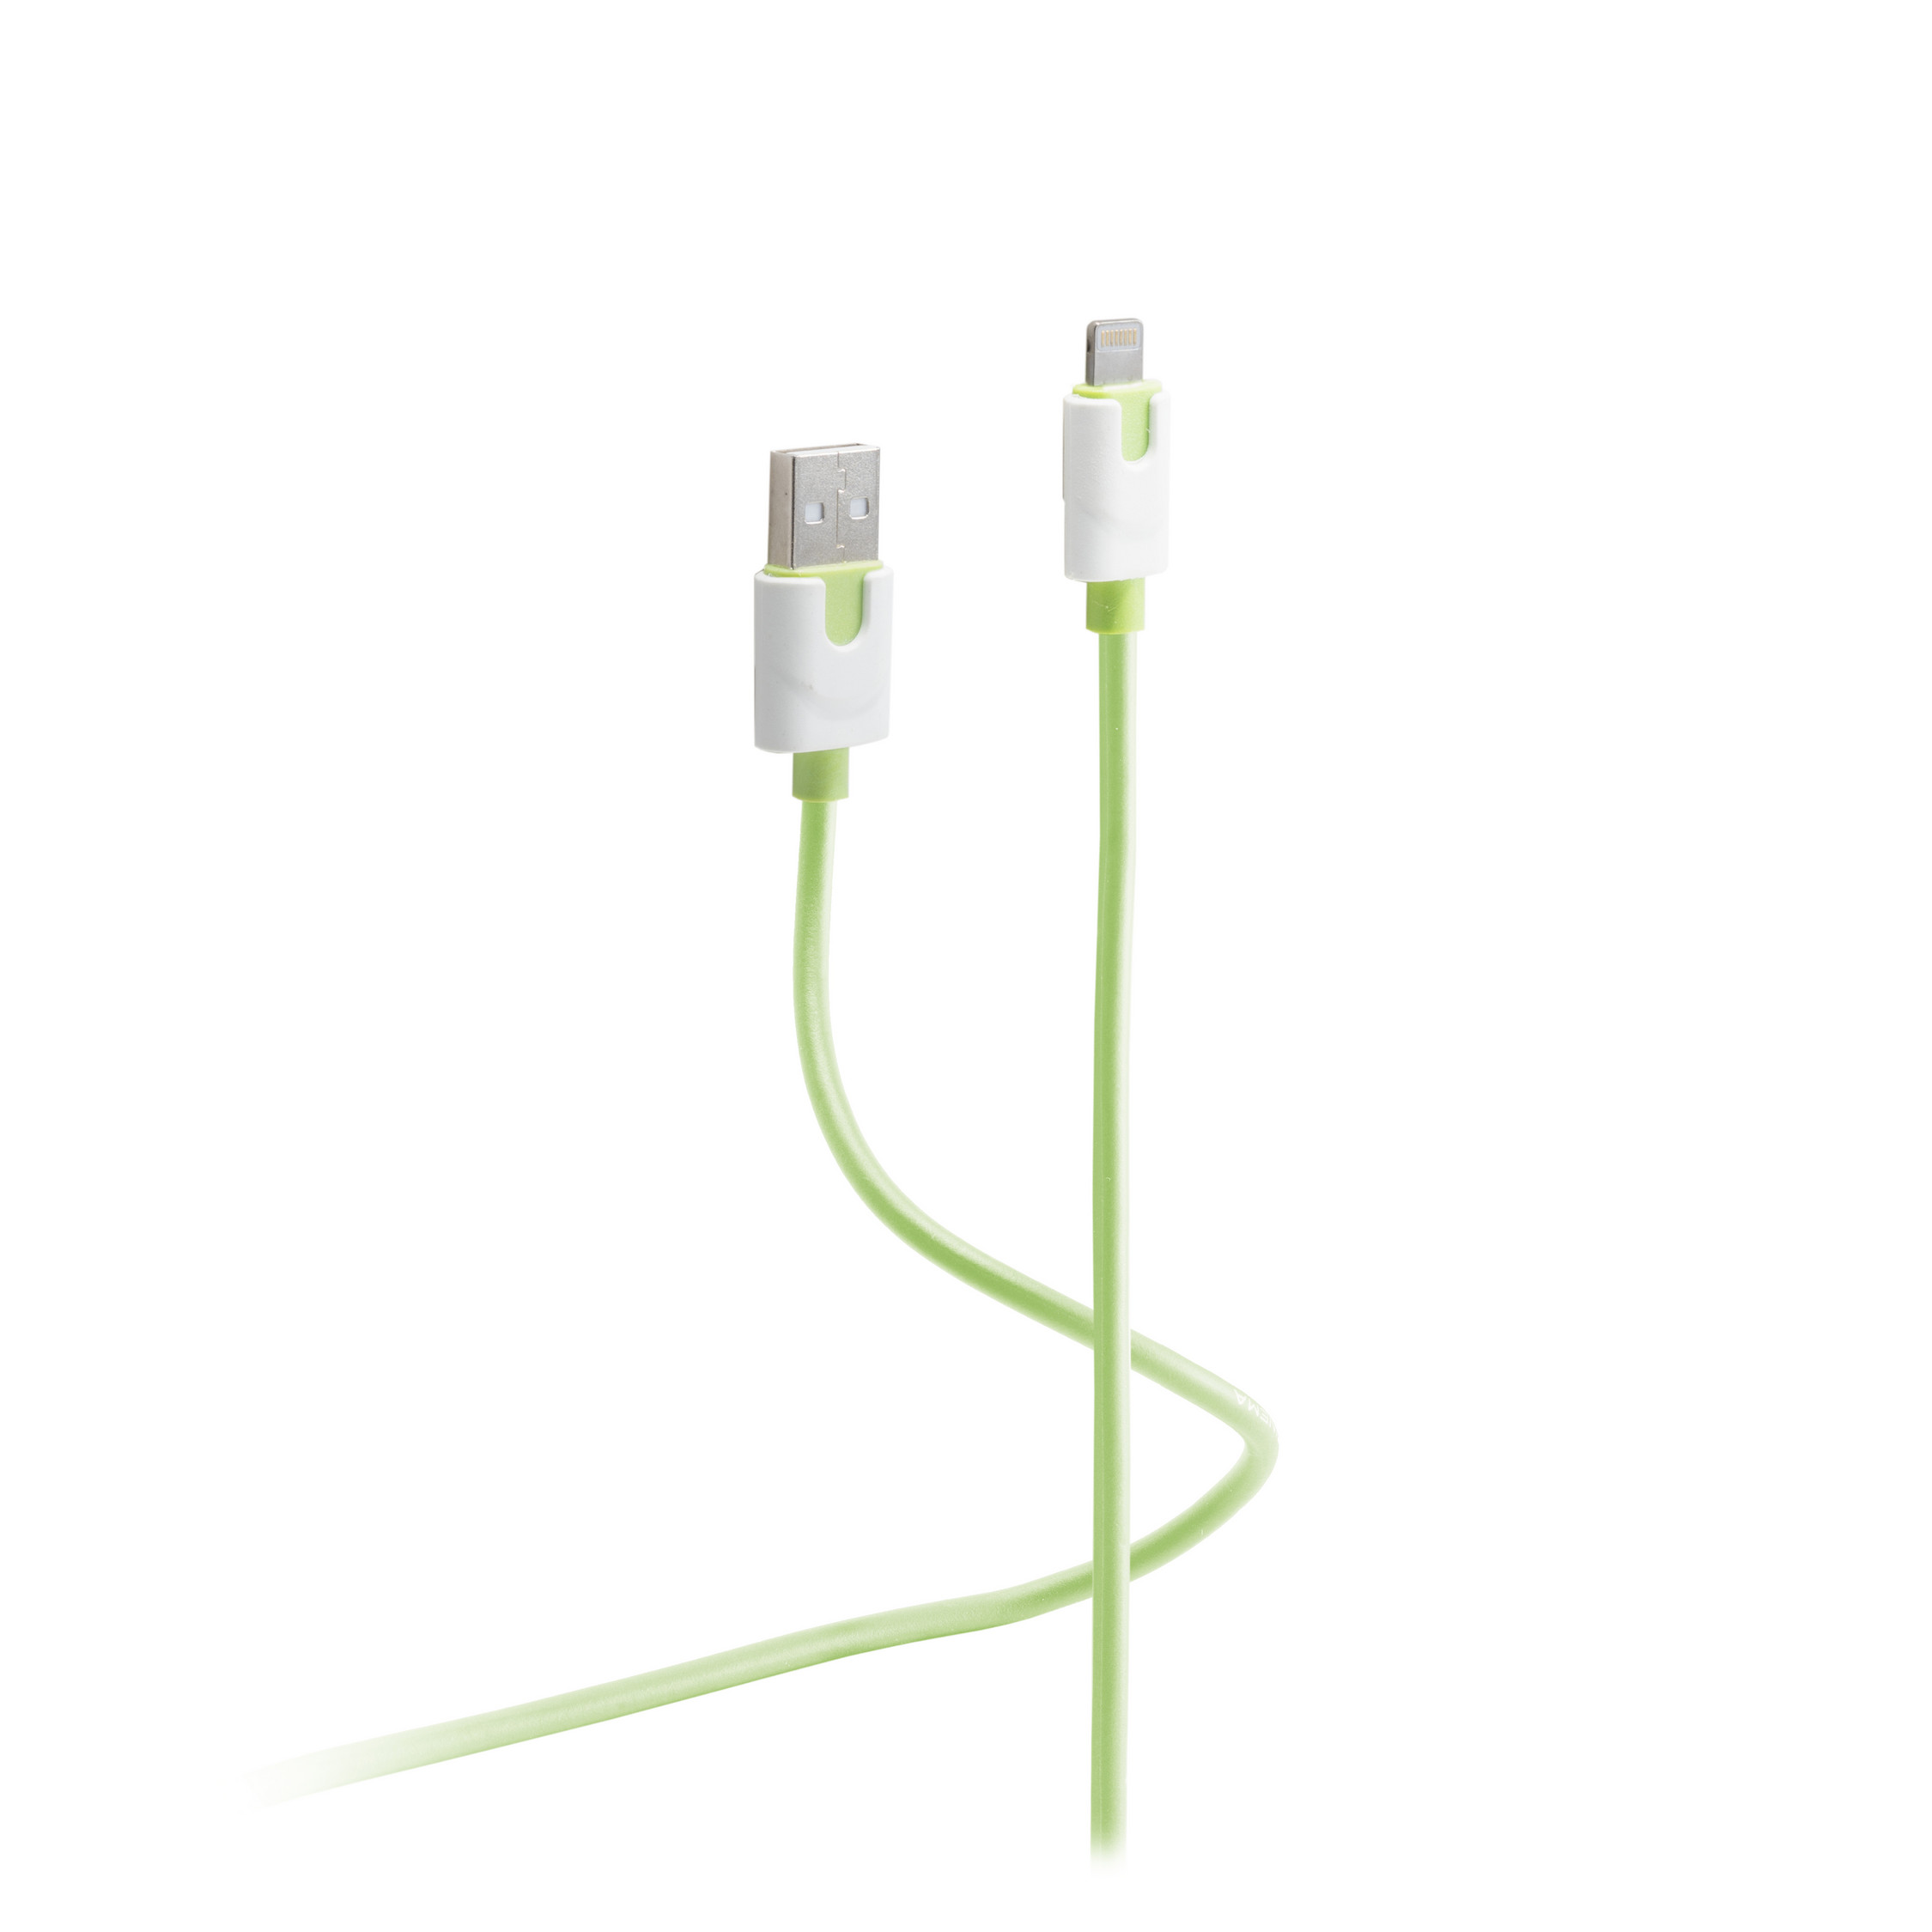 FLEXLINE 2m 8-pin Kabel auf A grün, Stecker USB Stecker USB-Ladekabel